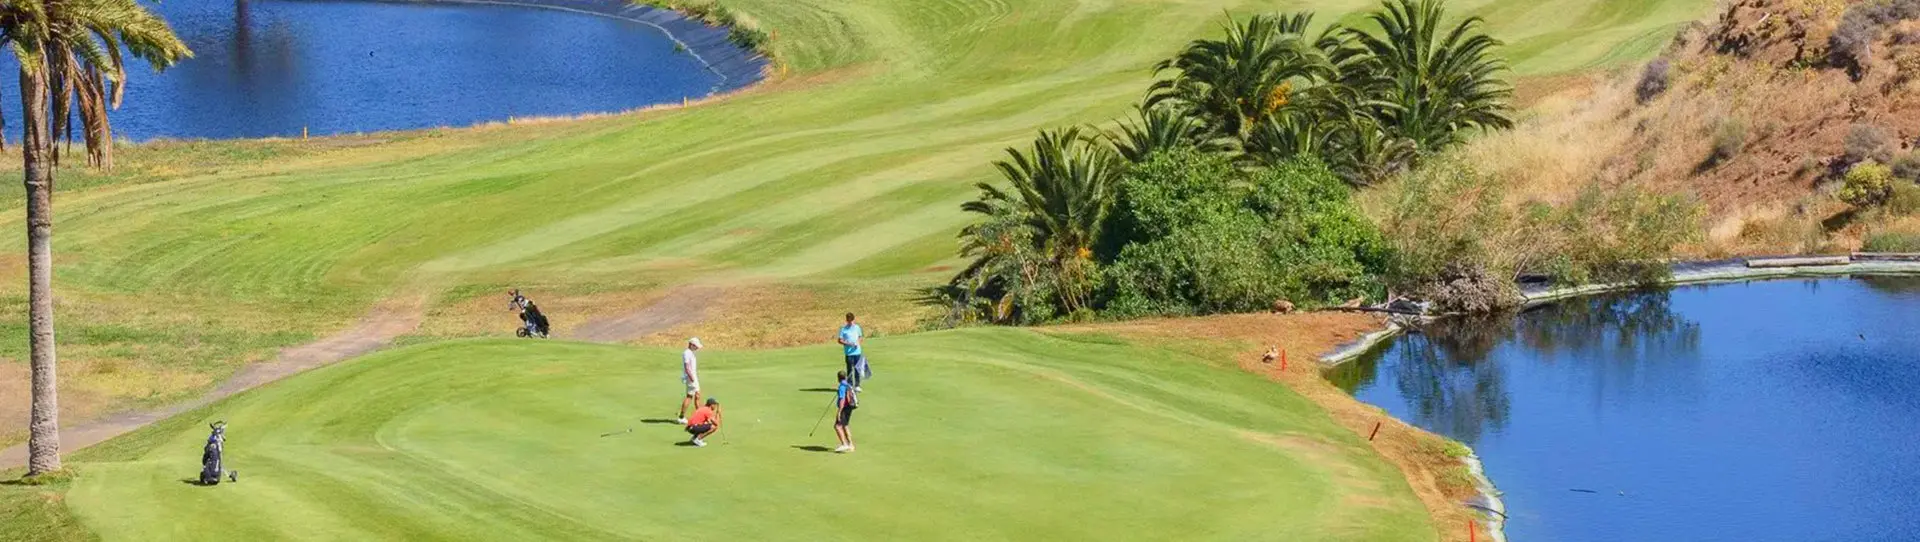 Spain golf holidays - El Cortijo 7 Days Unlimited Golf - Photo 3